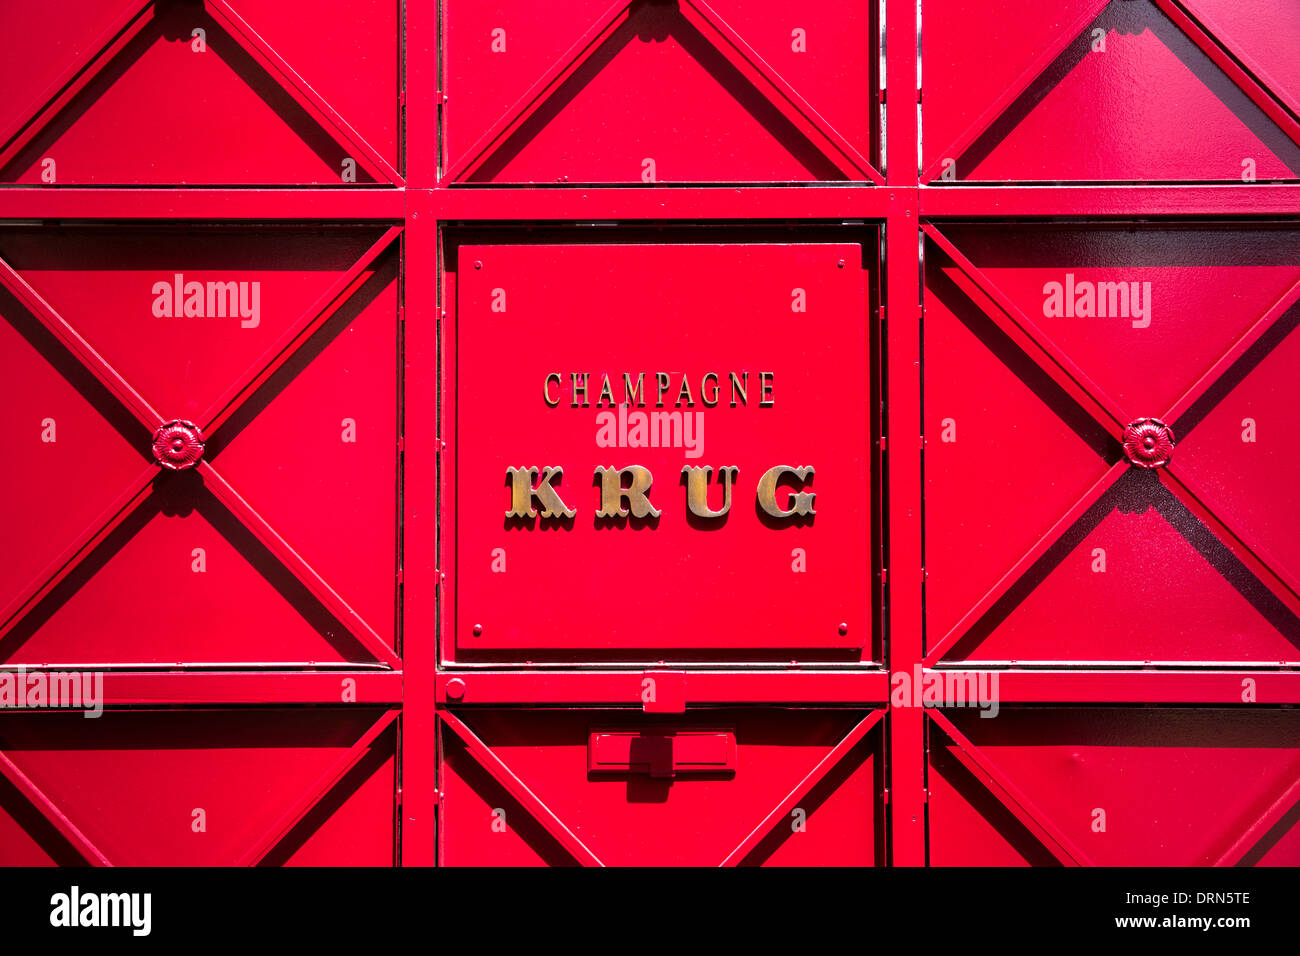 Logo of brand Krug – Stock Editorial Photo © 360ber #160477232